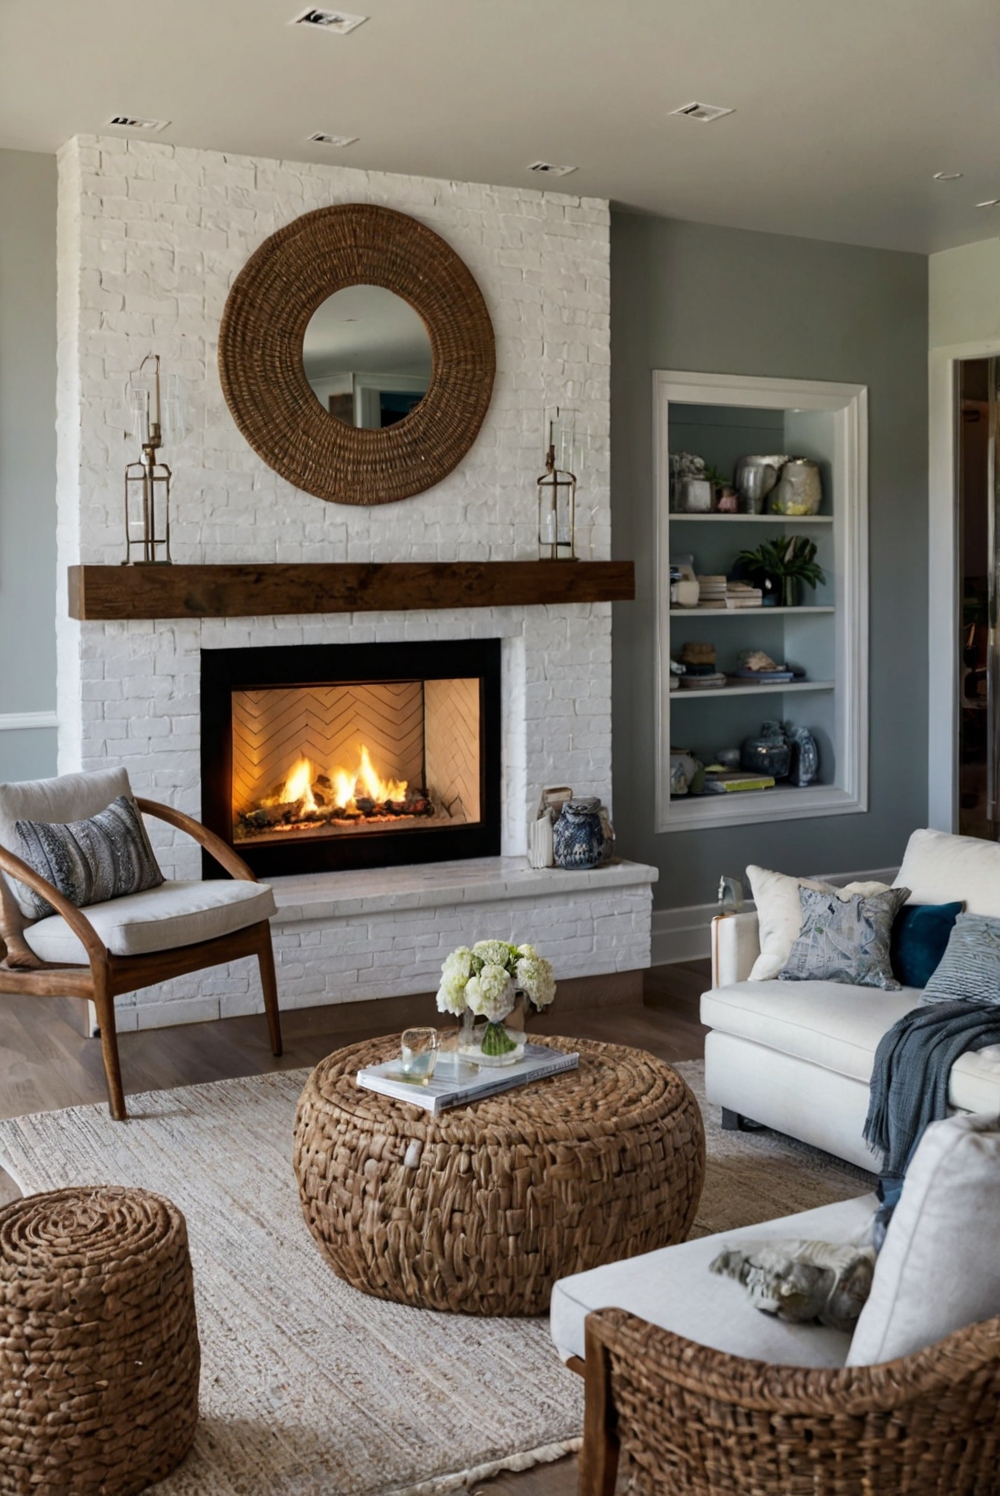 coastal living room design,coastal interior design,modern coastal decor,fireplace design,modern fireplace ideas,coastal home decor,fireplace decorating ideas